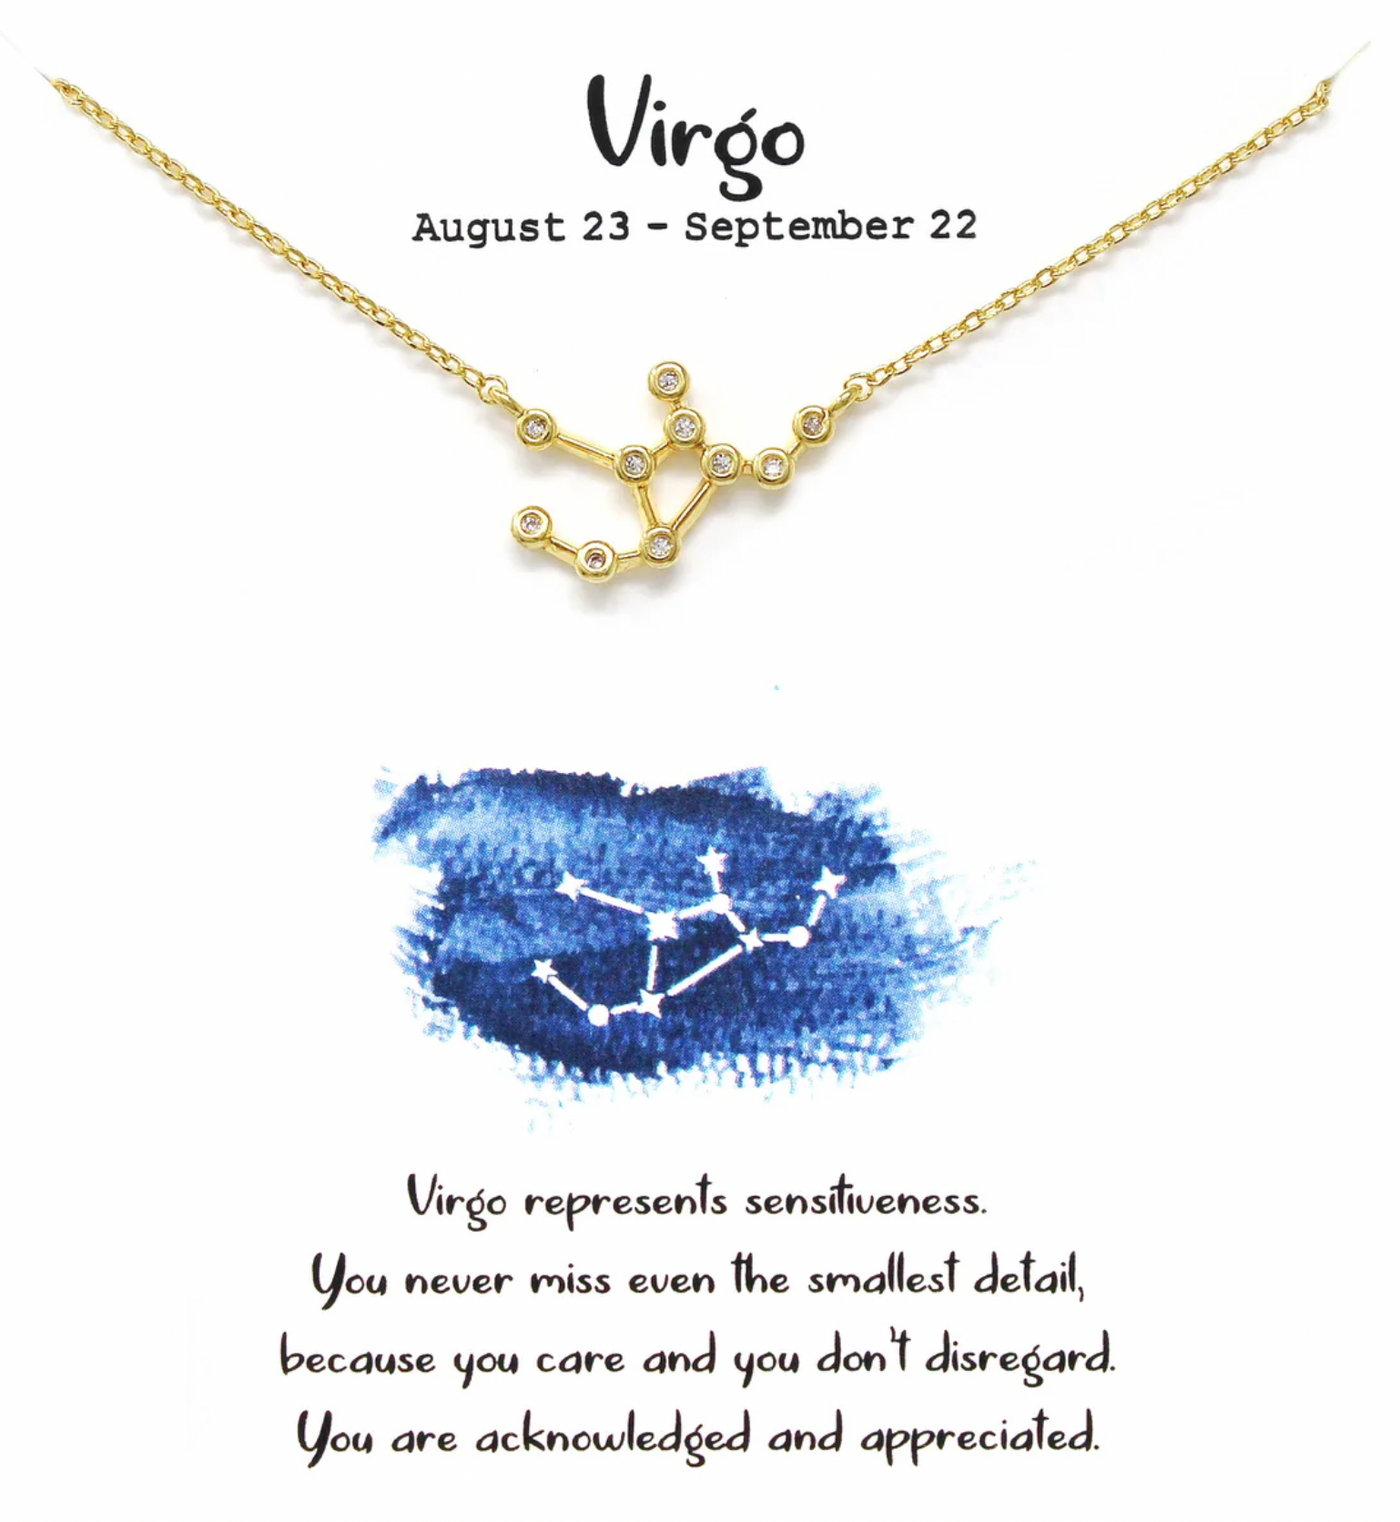 Virgo Zodiac Sign Necklace August 23 - September 22